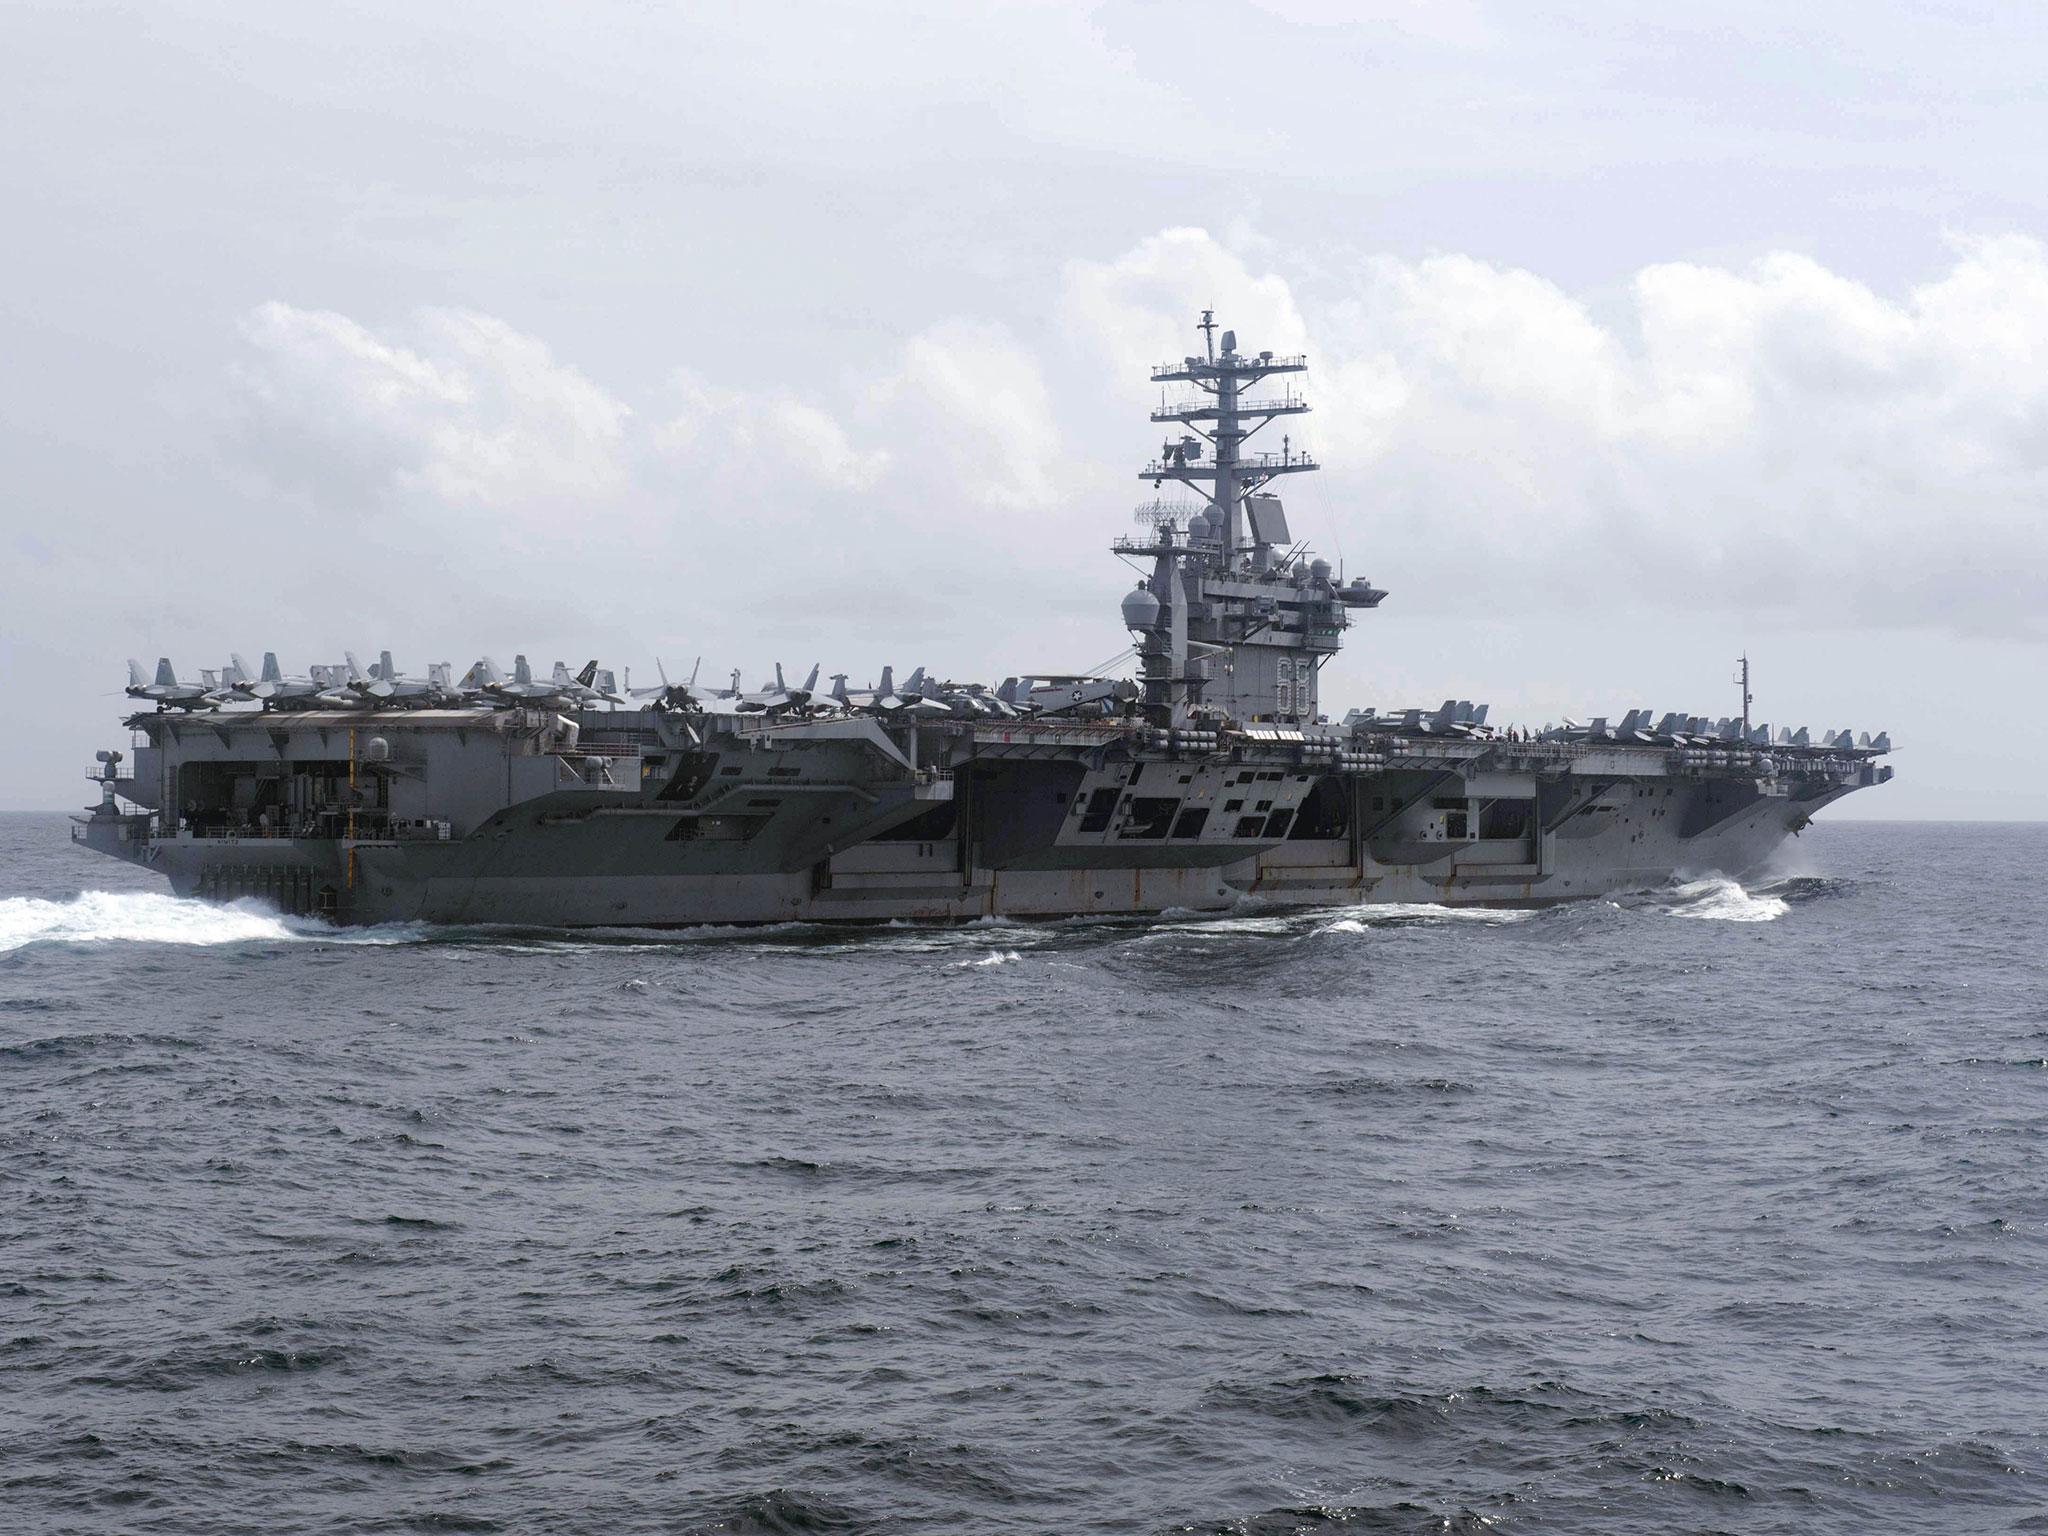 Iranian state media said the USS Nimitz sailed near to an Iranian offshore oil platform